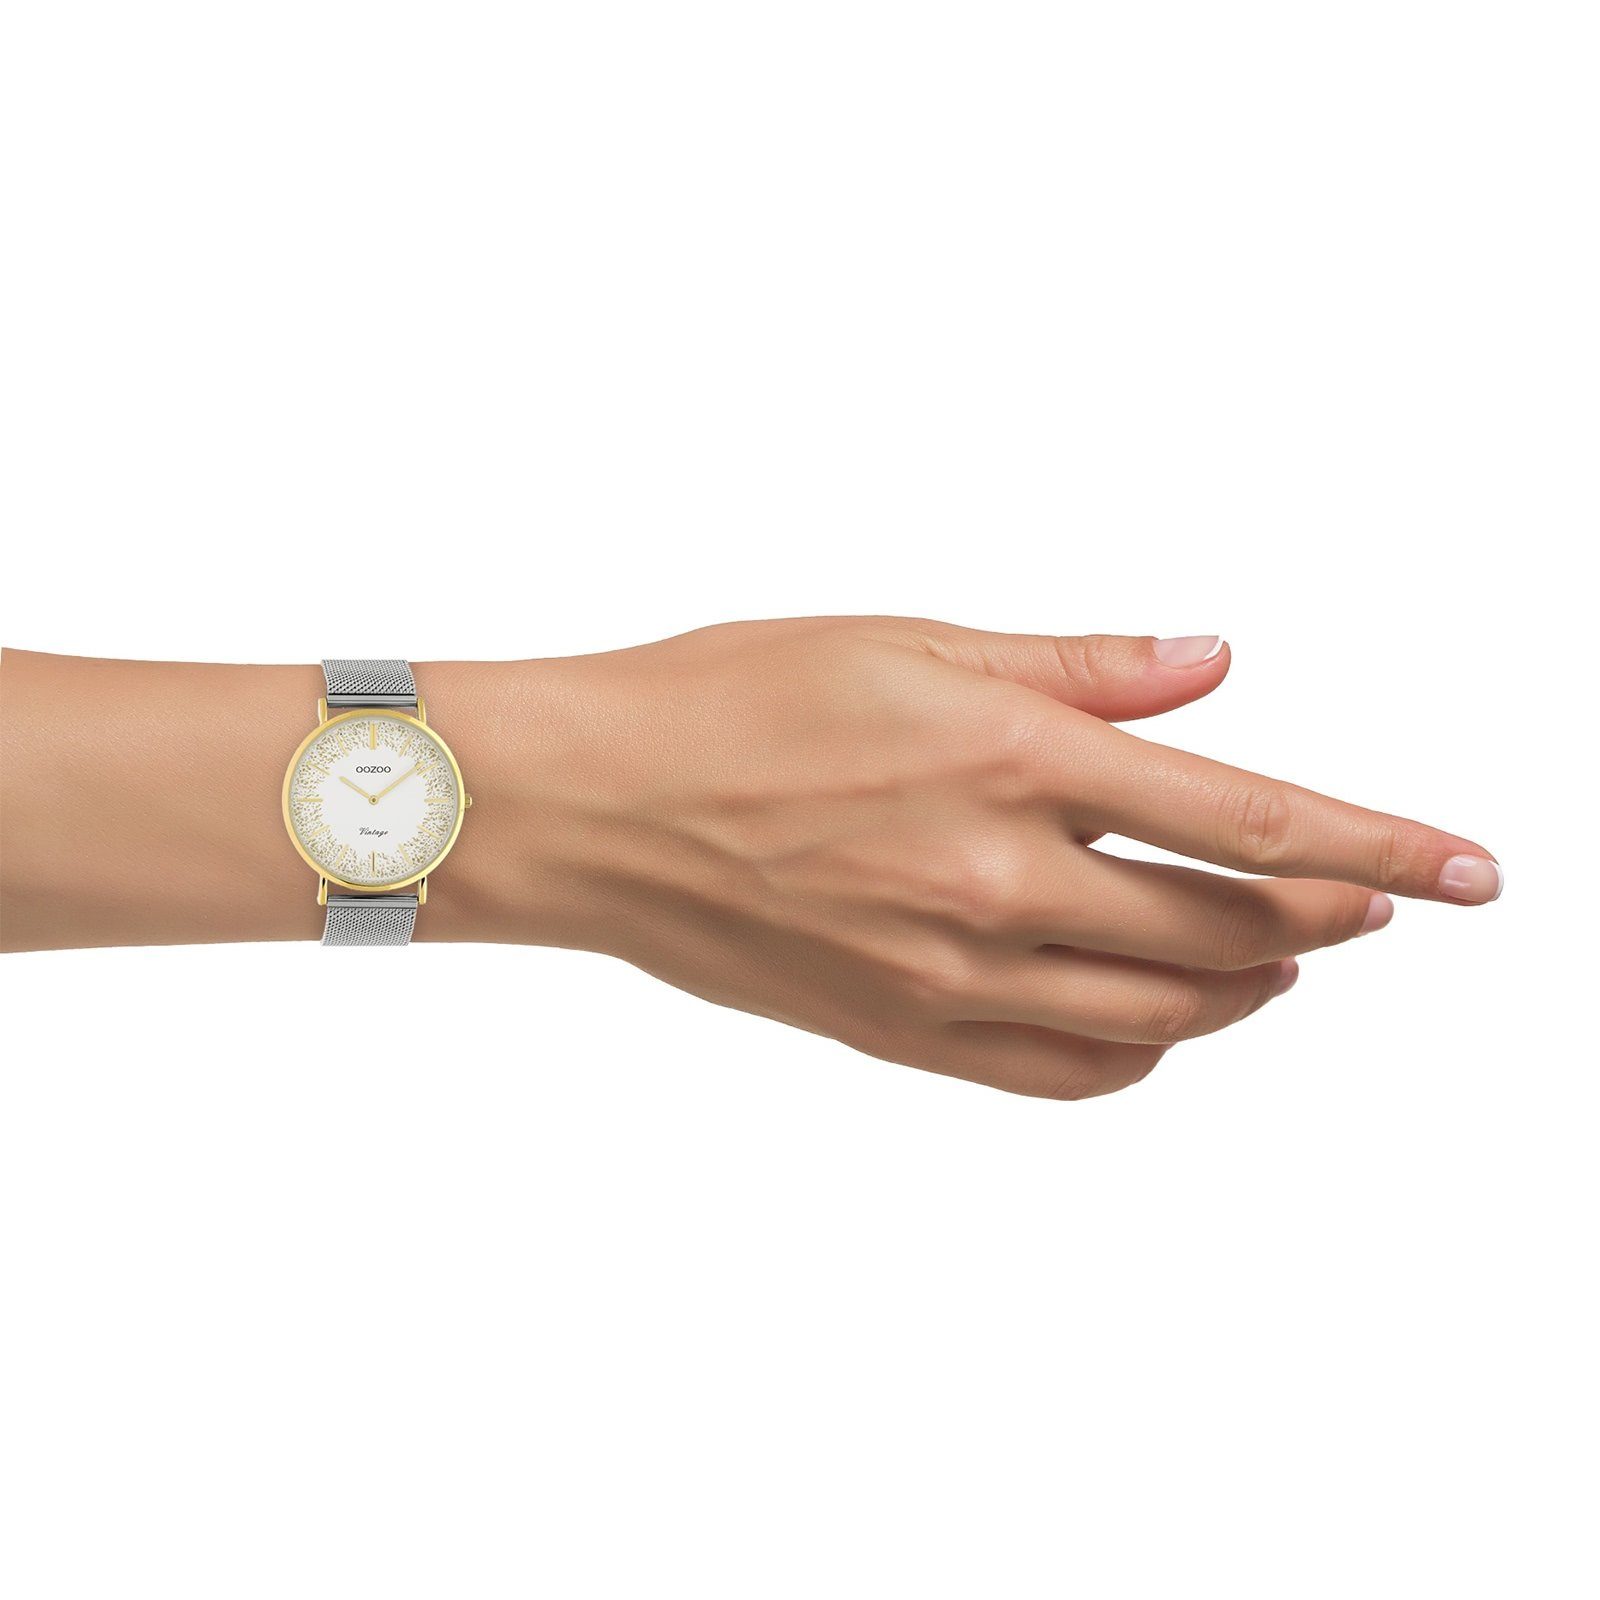 OOZOO Quarzuhr Elegant-Style Damenuhr (ca. Armbanduhr Oozoo rund, Edelstahl groß Edelstahlarmband, Analog, Damen 40mm)